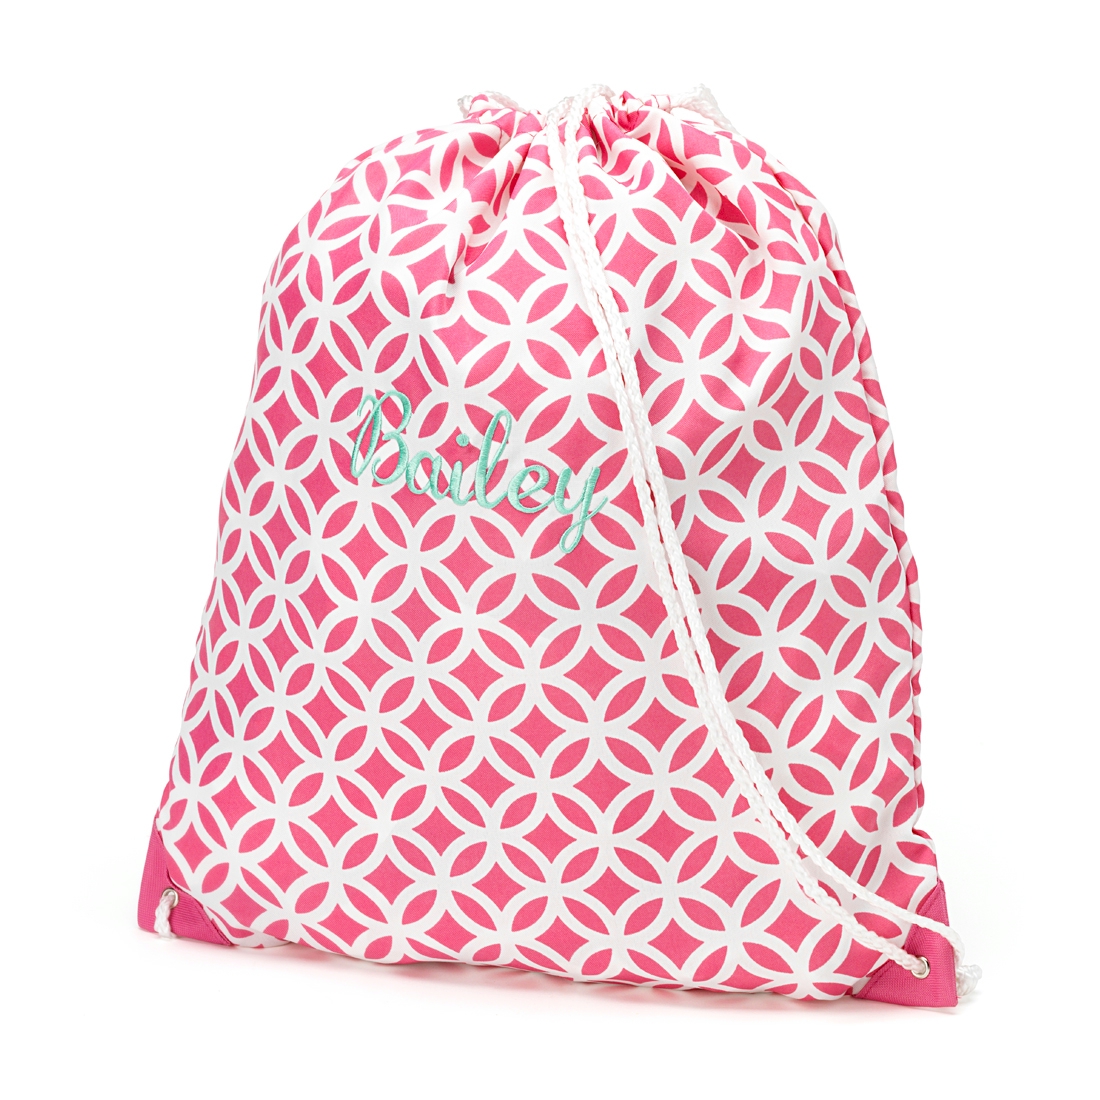 Gym Bag Drawstring Pack Embroidery Blanks - PINK SADIE - CLOSEOUT